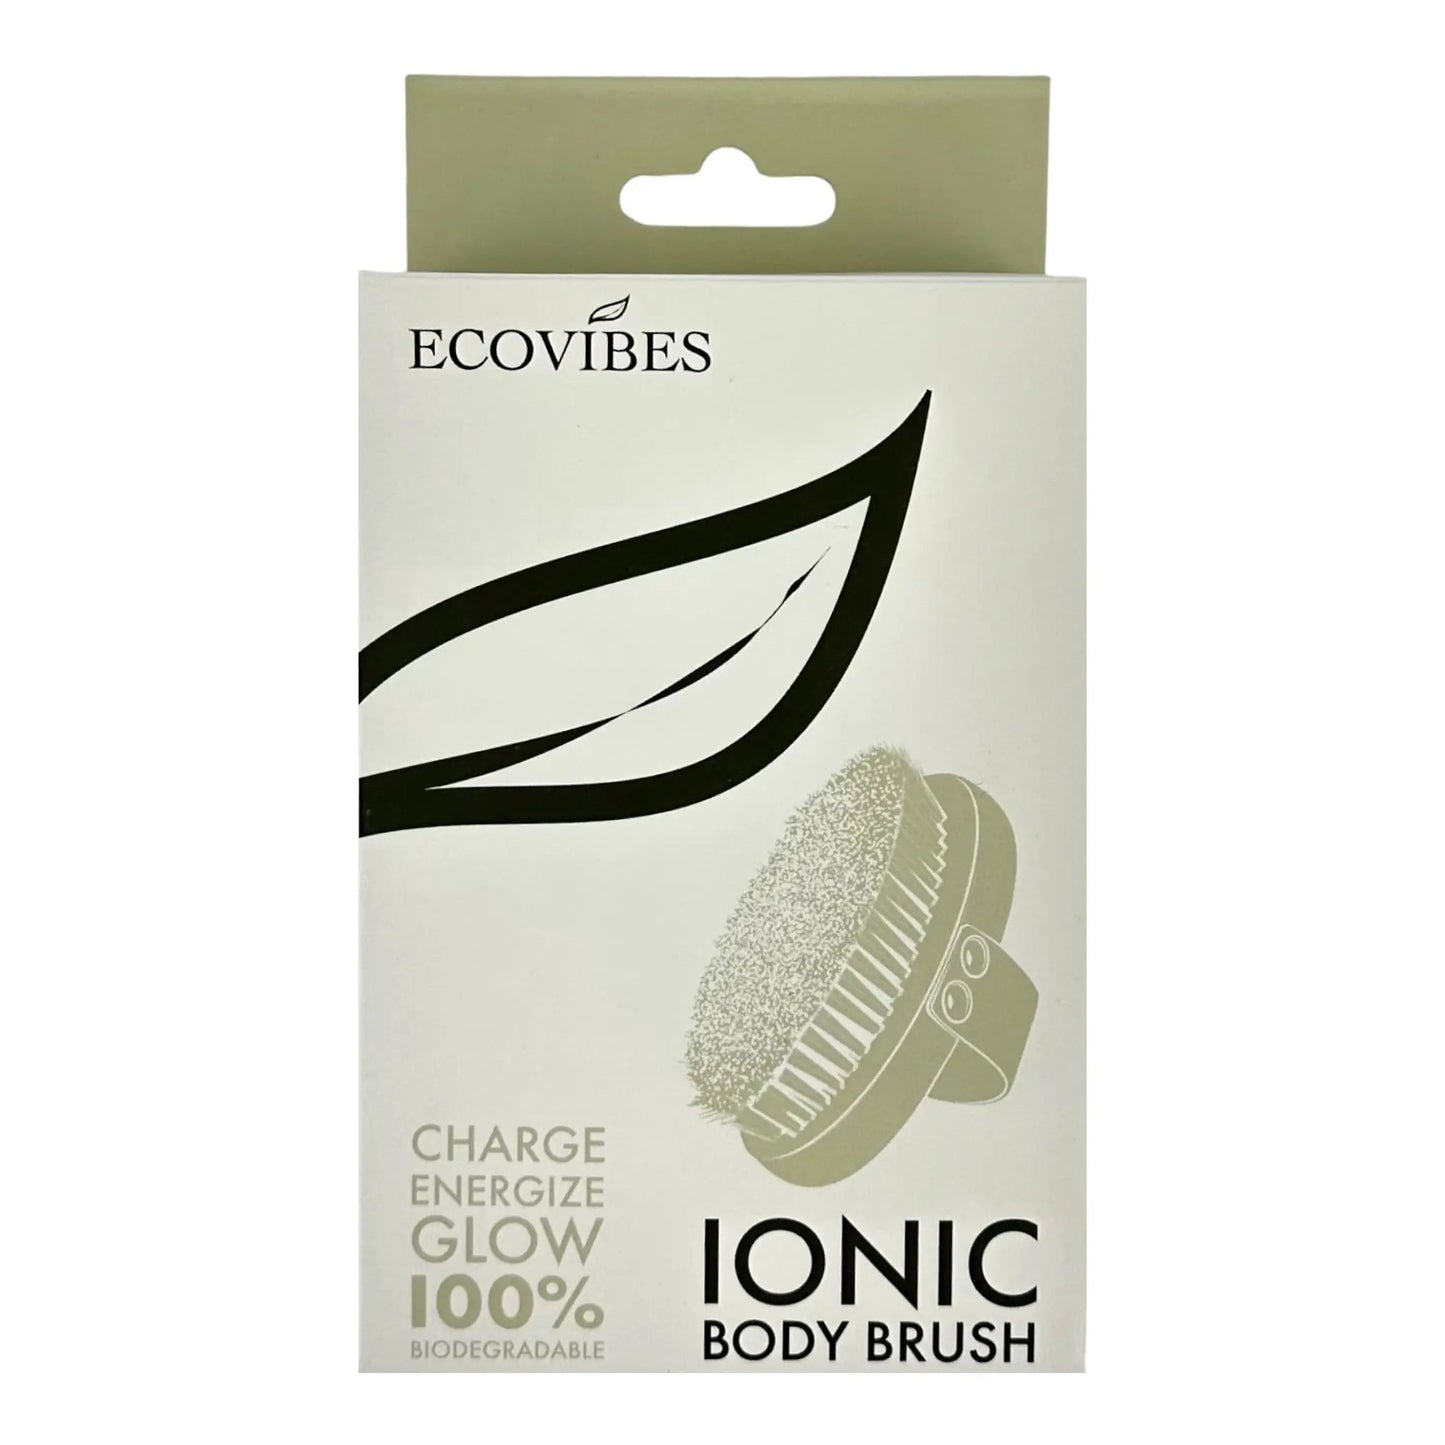 Ionic Dry Body Brush - Ecovibes